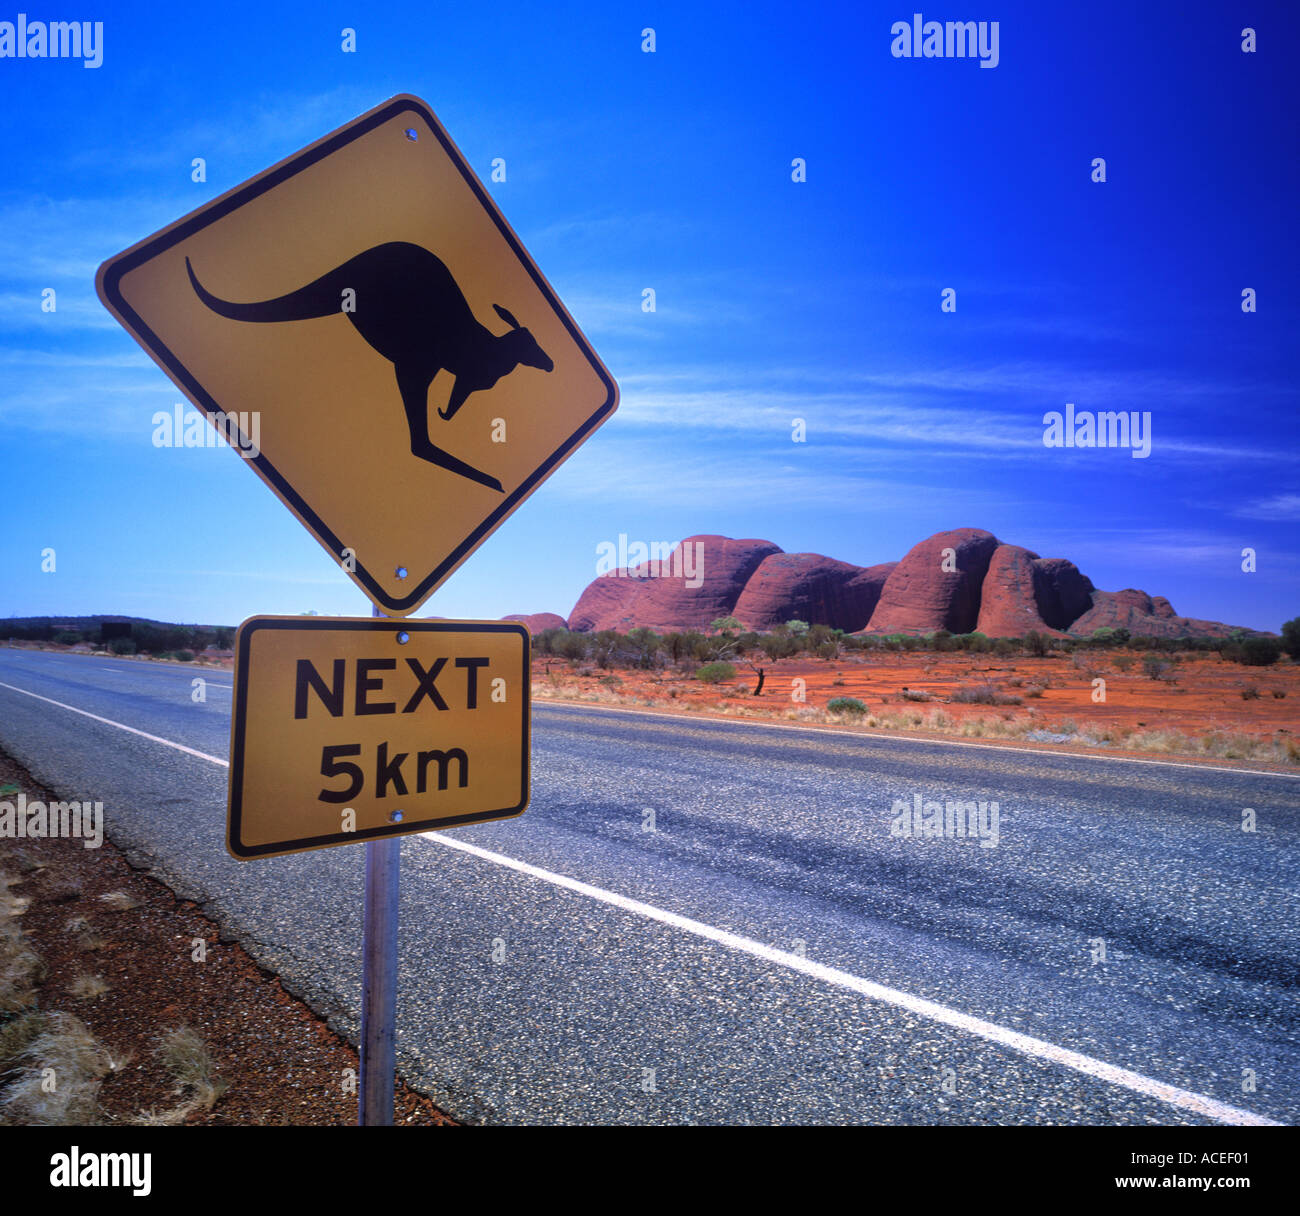 Kangaroo warning sign at The Olgas Kata Tjuta The Northern Territory Australia Stock Photo